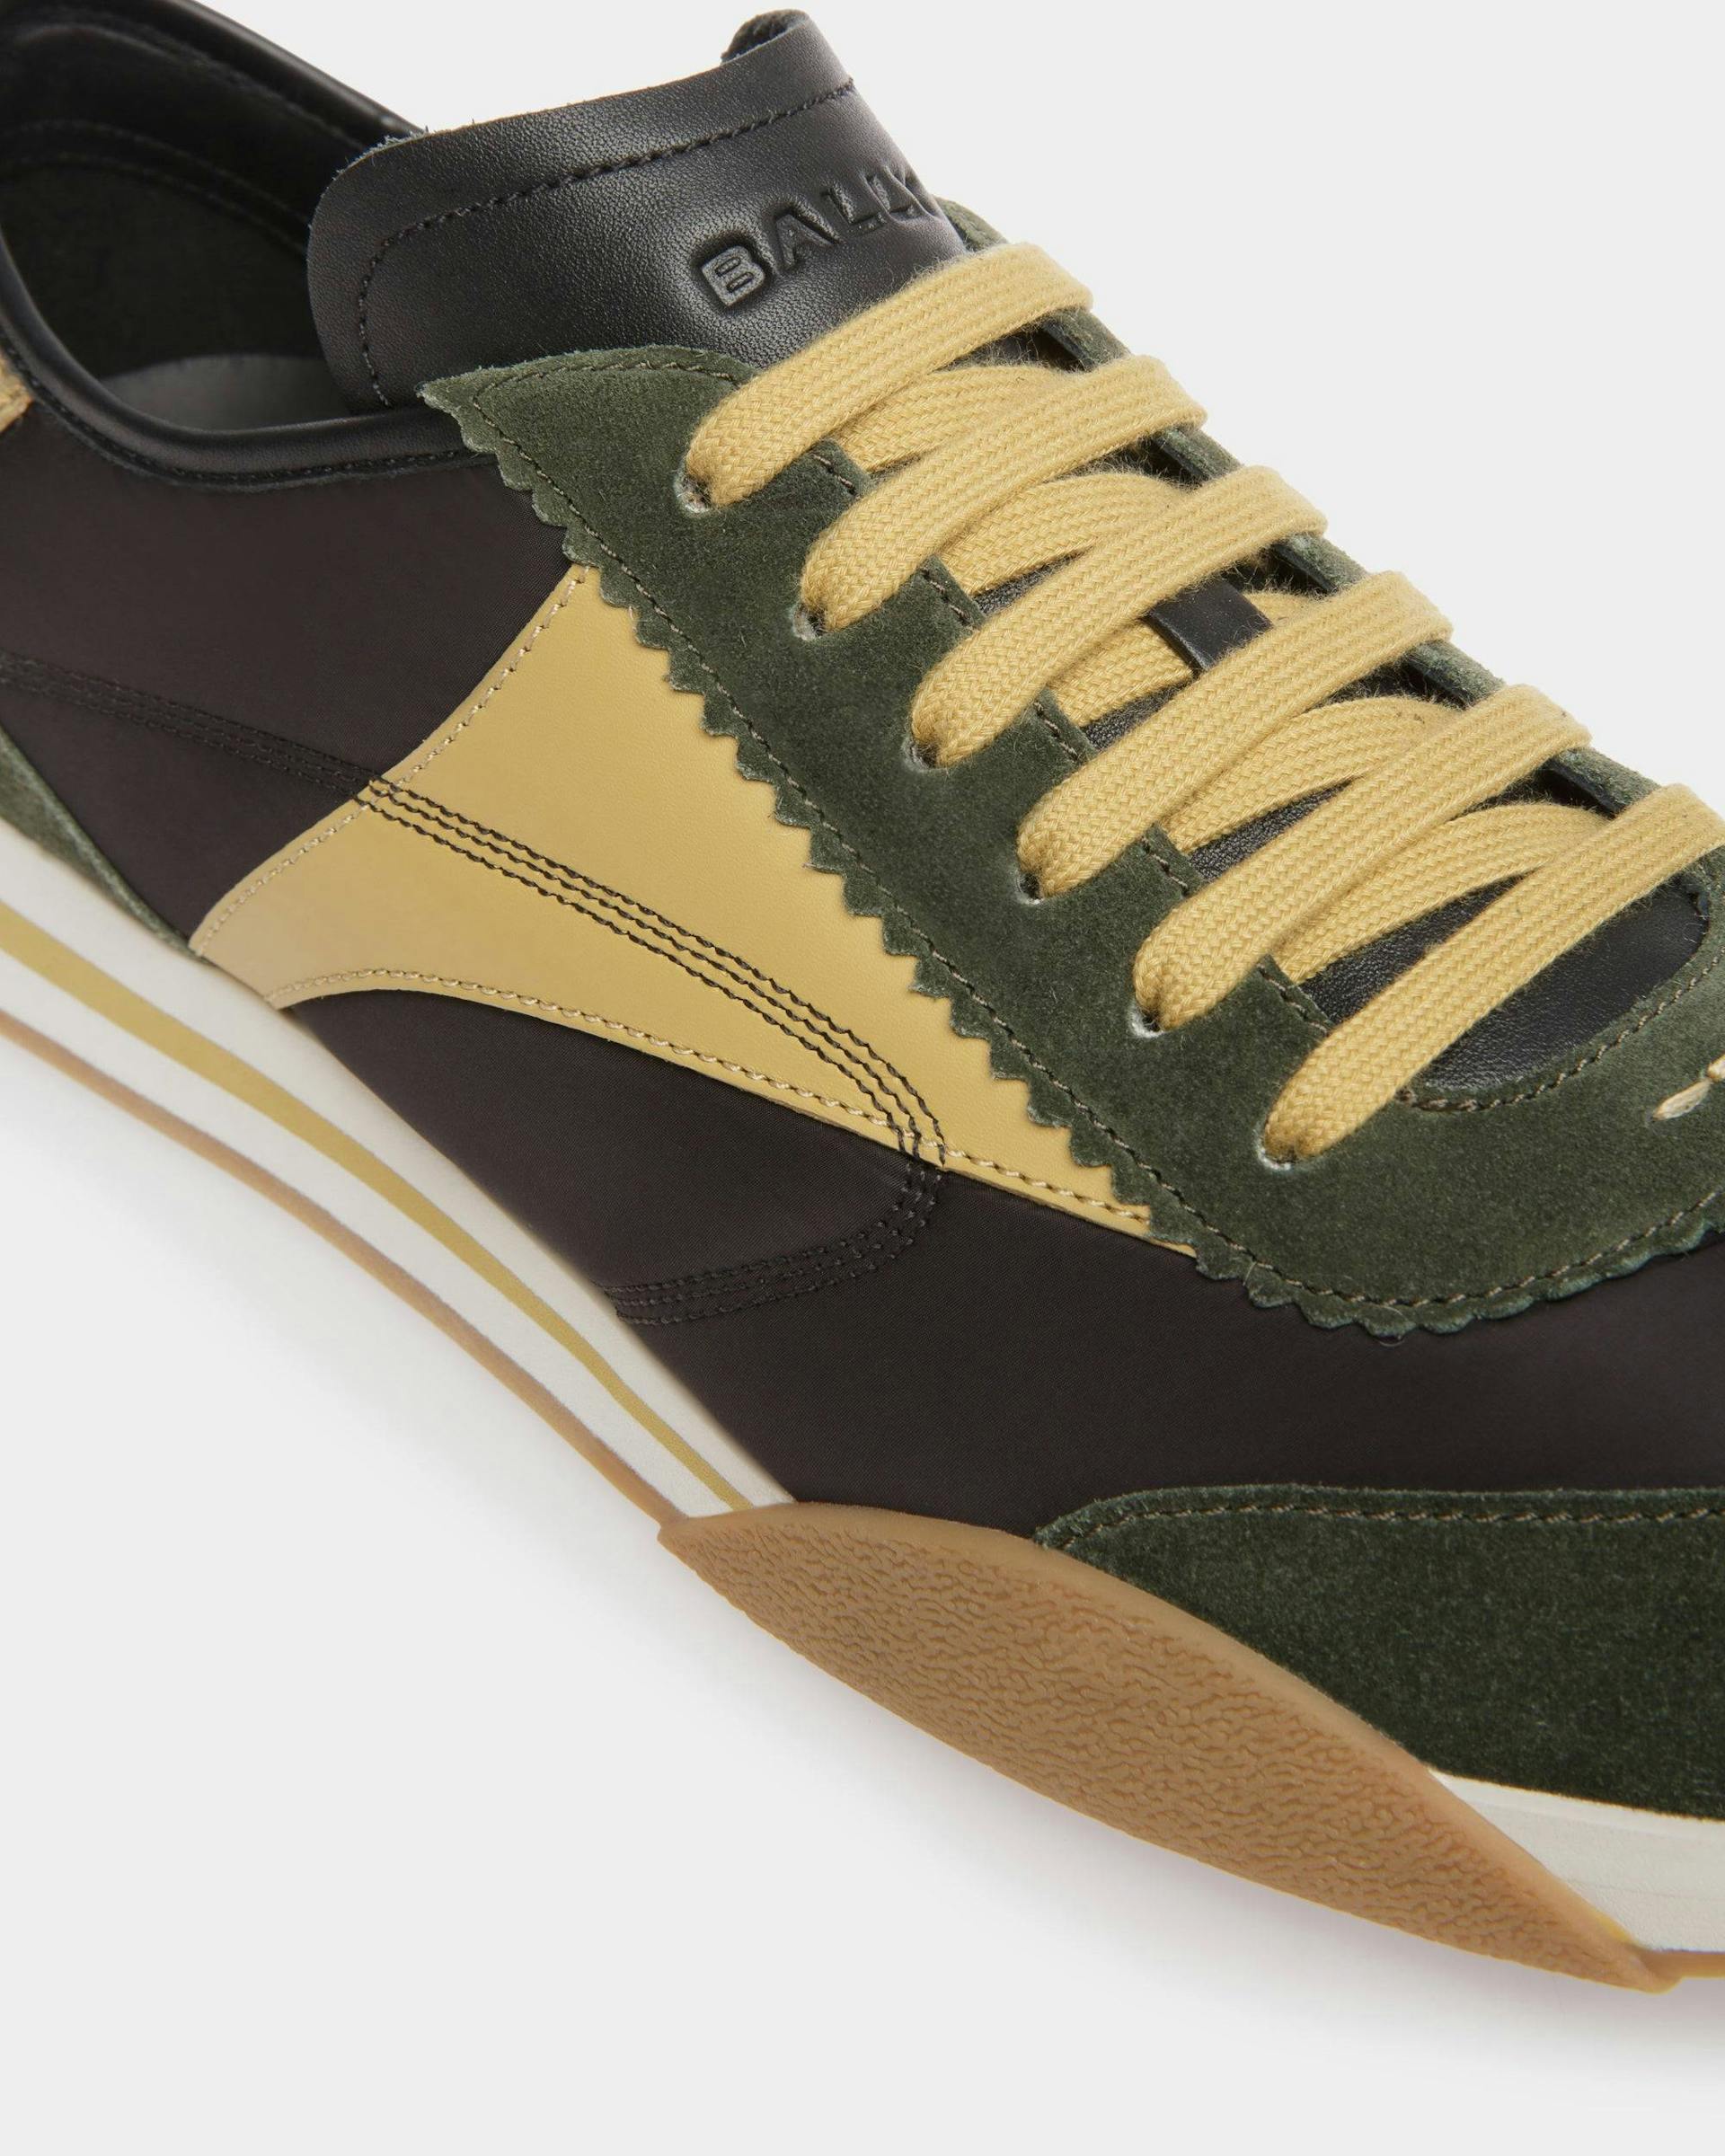 Sneakers Sussex En cuir et tissu vert et noir - Homme - Bally - 06